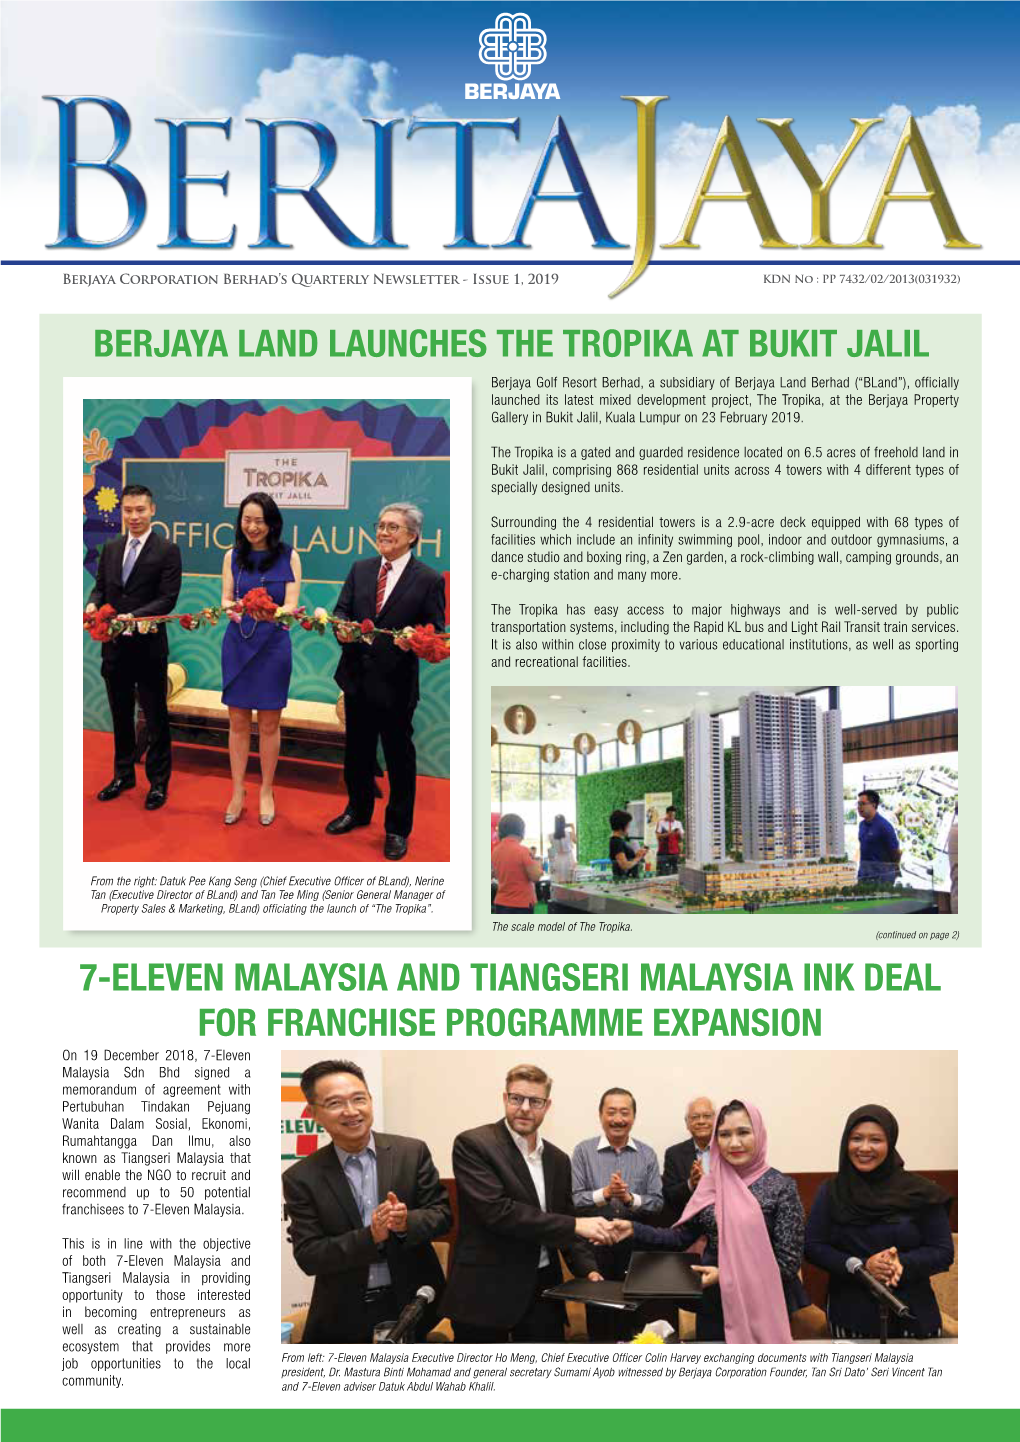 Berjaya Land Launches the Tropika at Bukit Jalil